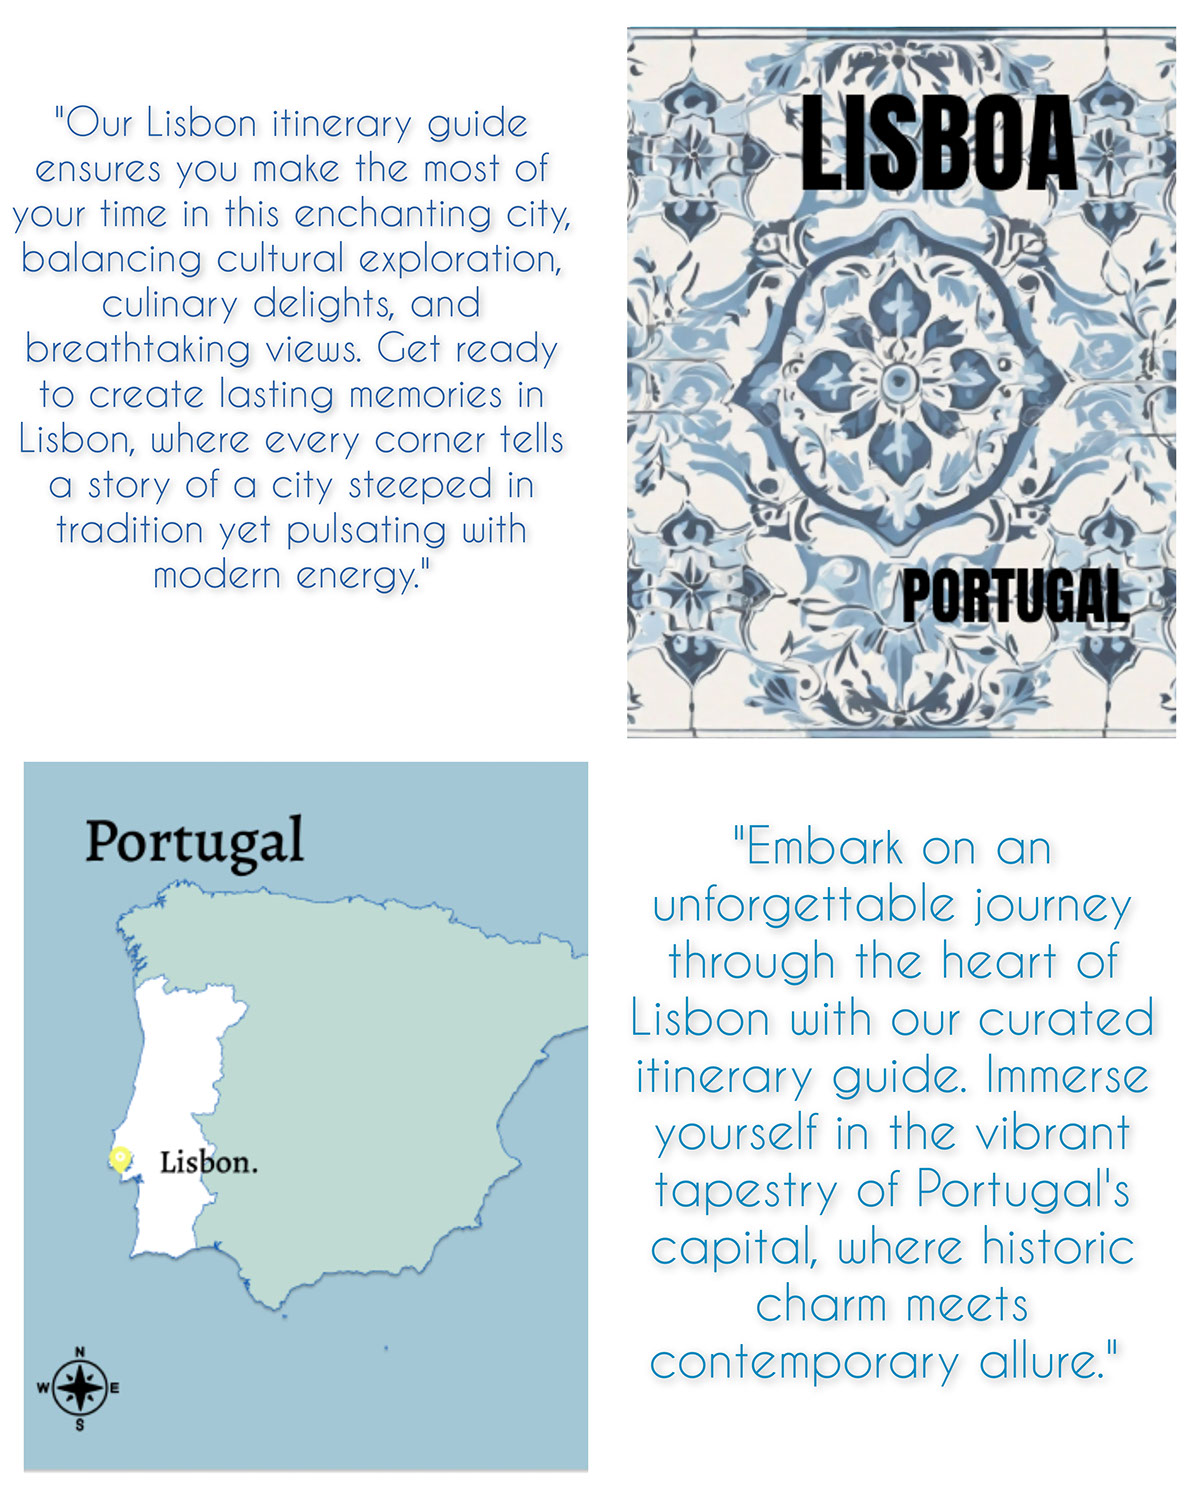 Lisboa pocket guide rendition image